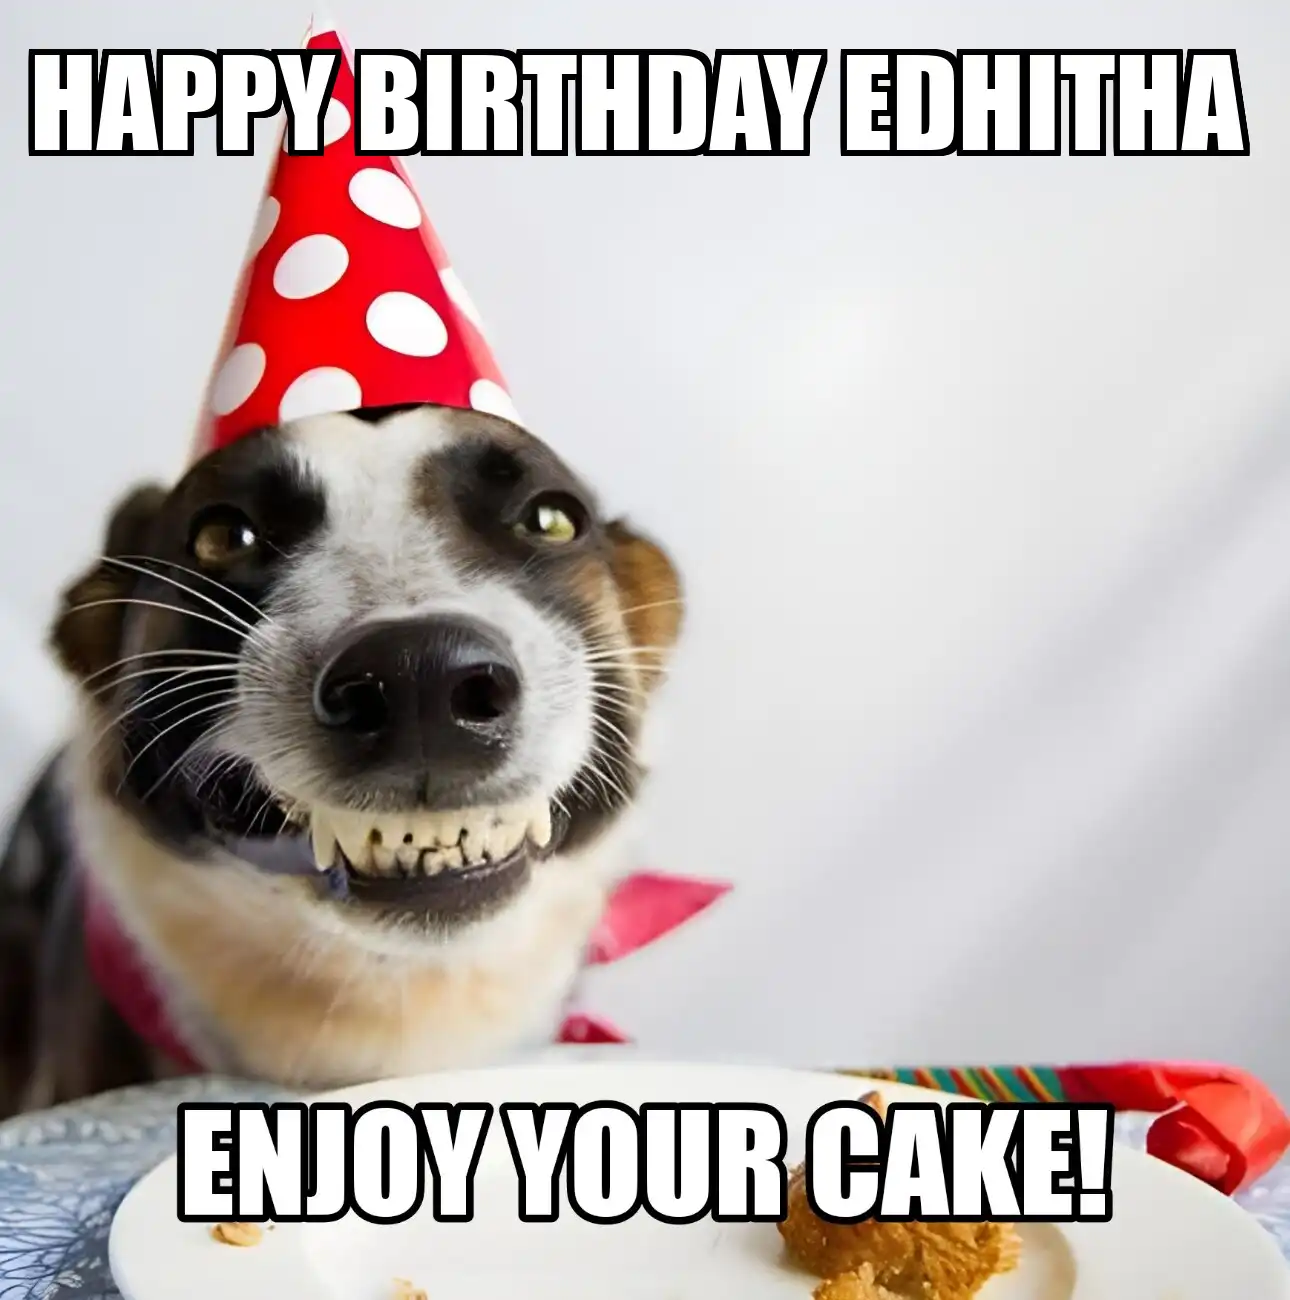 Happy Birthday Edhitha Enjoy Your Cake Dog Meme